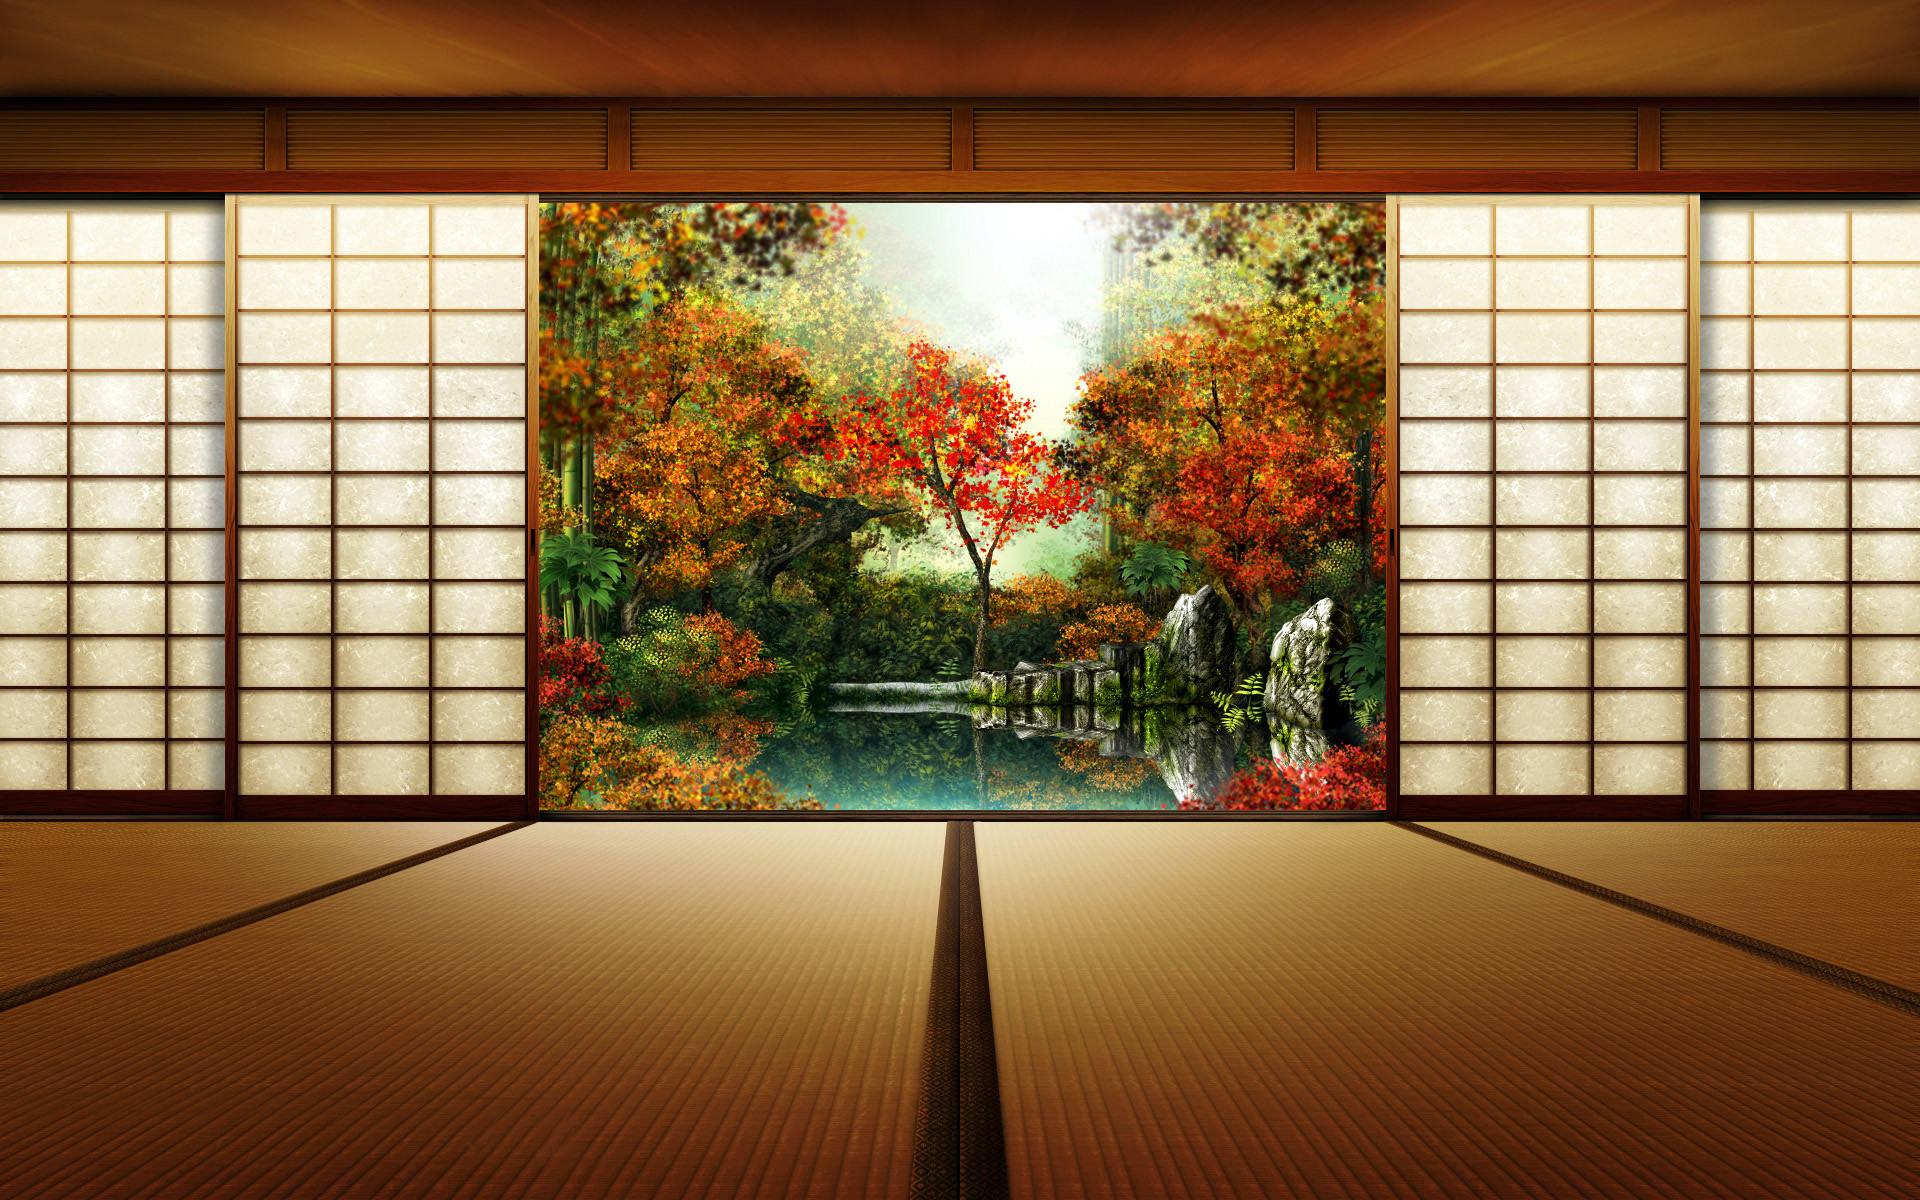 1920x1200 Japanese Garden Wallpapers - Full HD wallpaper search